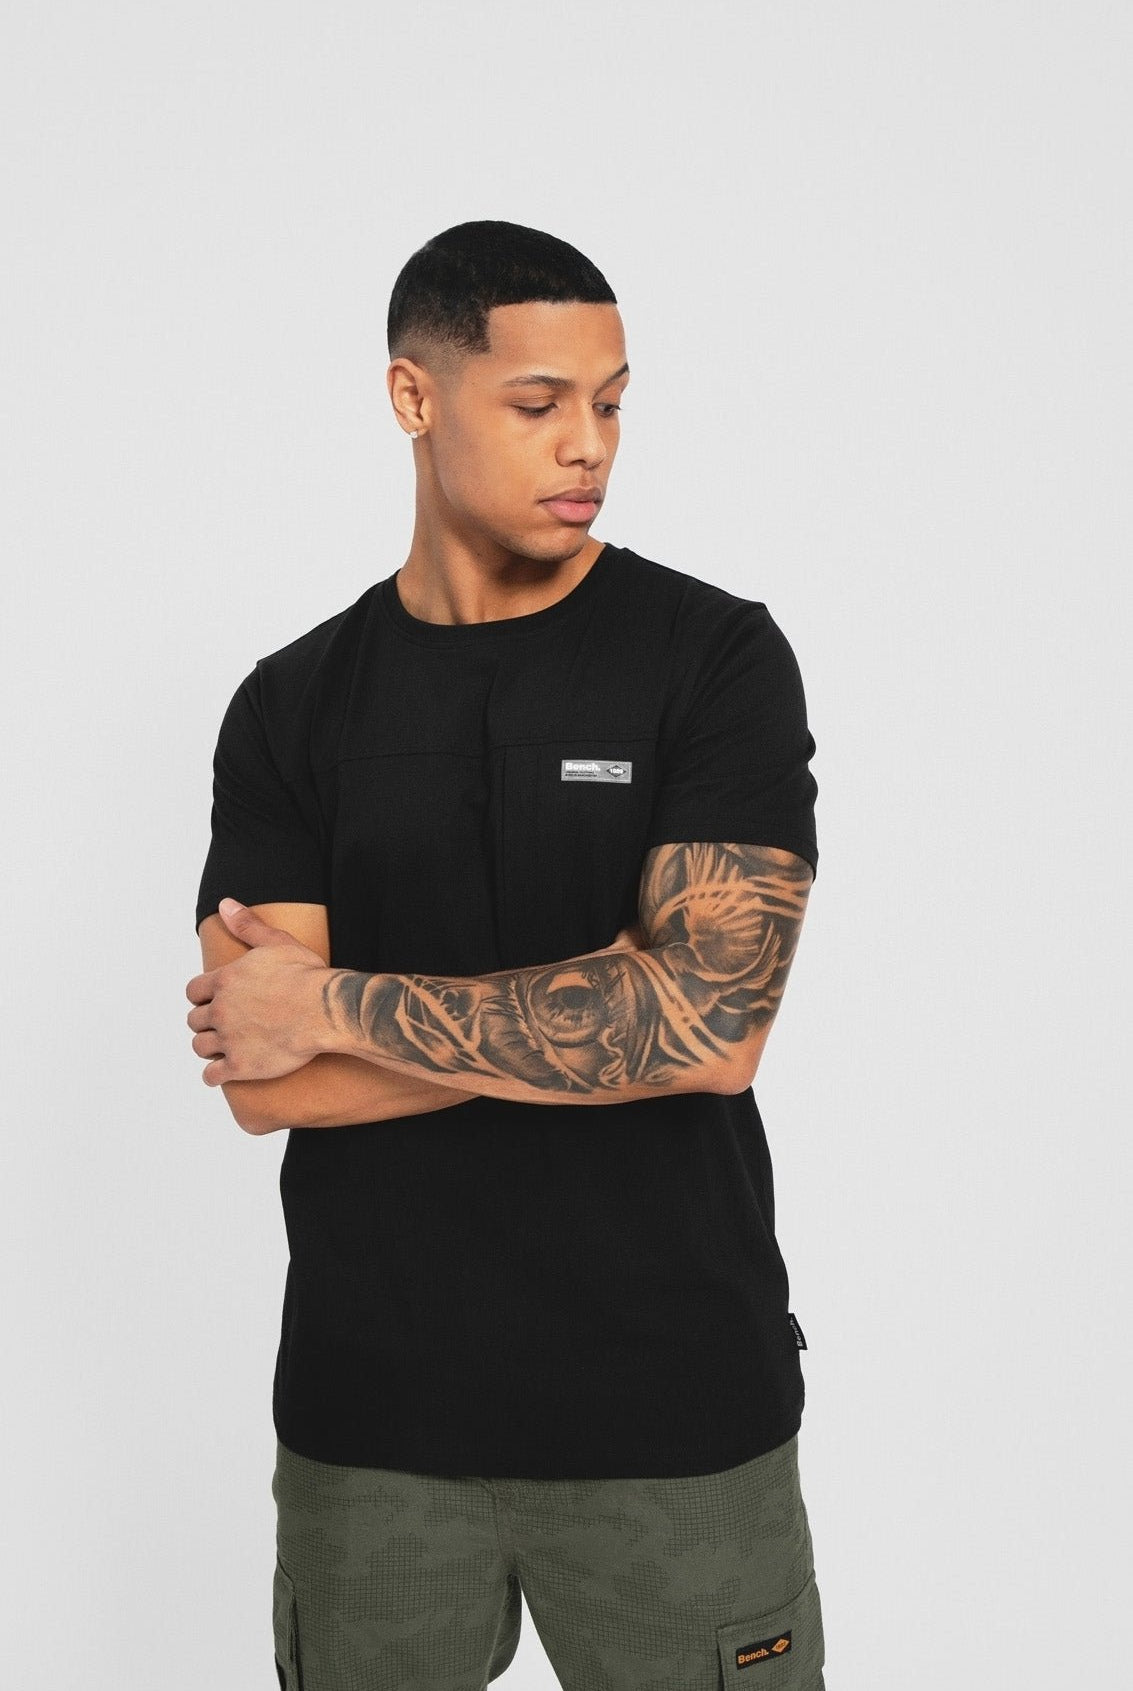 Mens 'ALGODA' T-Shirt - BLACK - Shop at www.Bench.co.uk #LoveMyHood